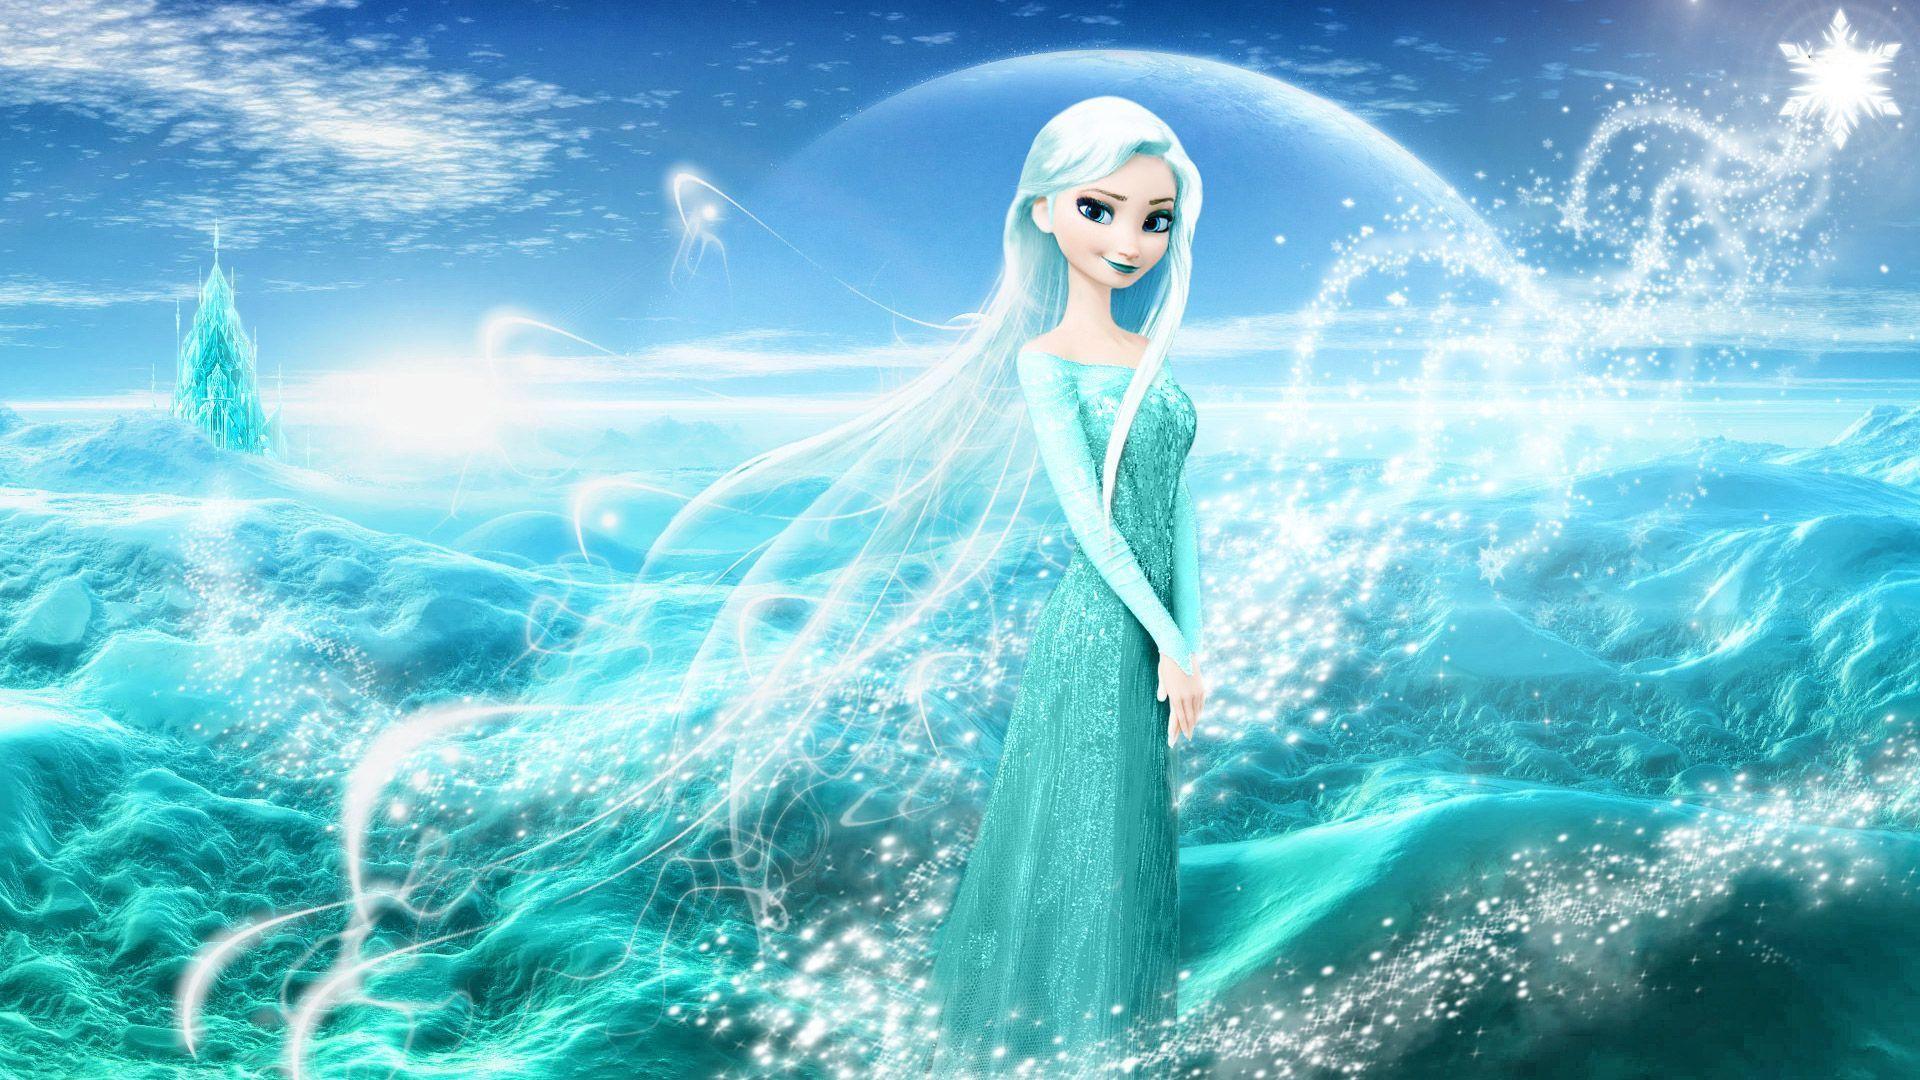 Elsa Frozen Image PPT Backgrounds